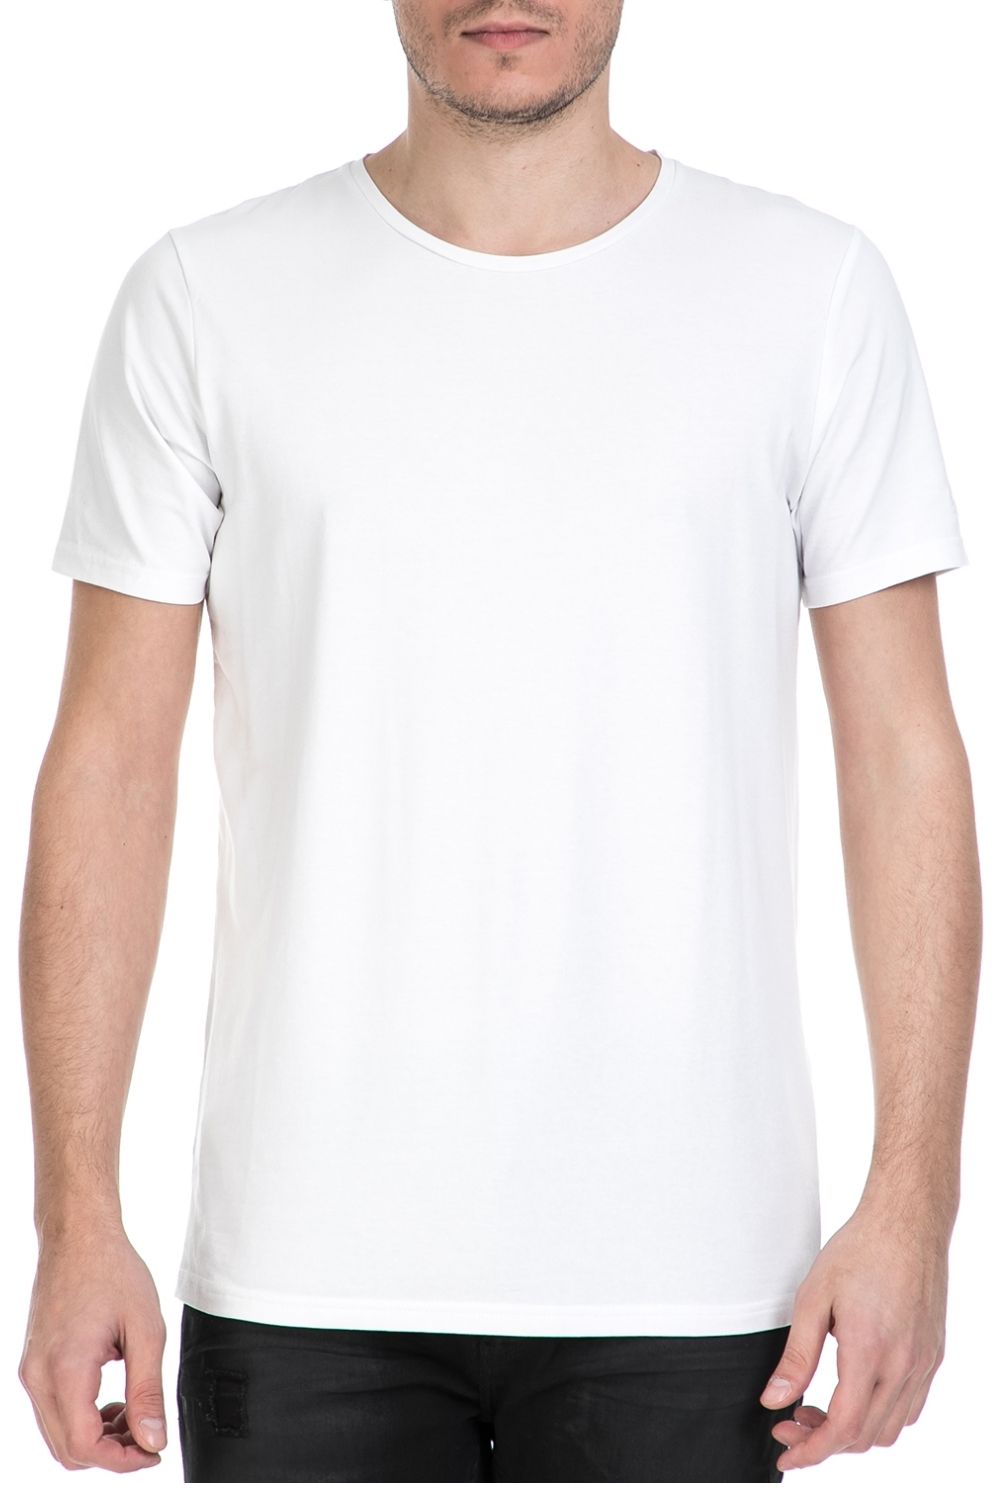 GARCIA JEANS - Κοντομάνικη μπλούζα GARCIA JEANS λευκή Ανδρικά/Ρούχα/Μπλούζες/Κοντομάνικες